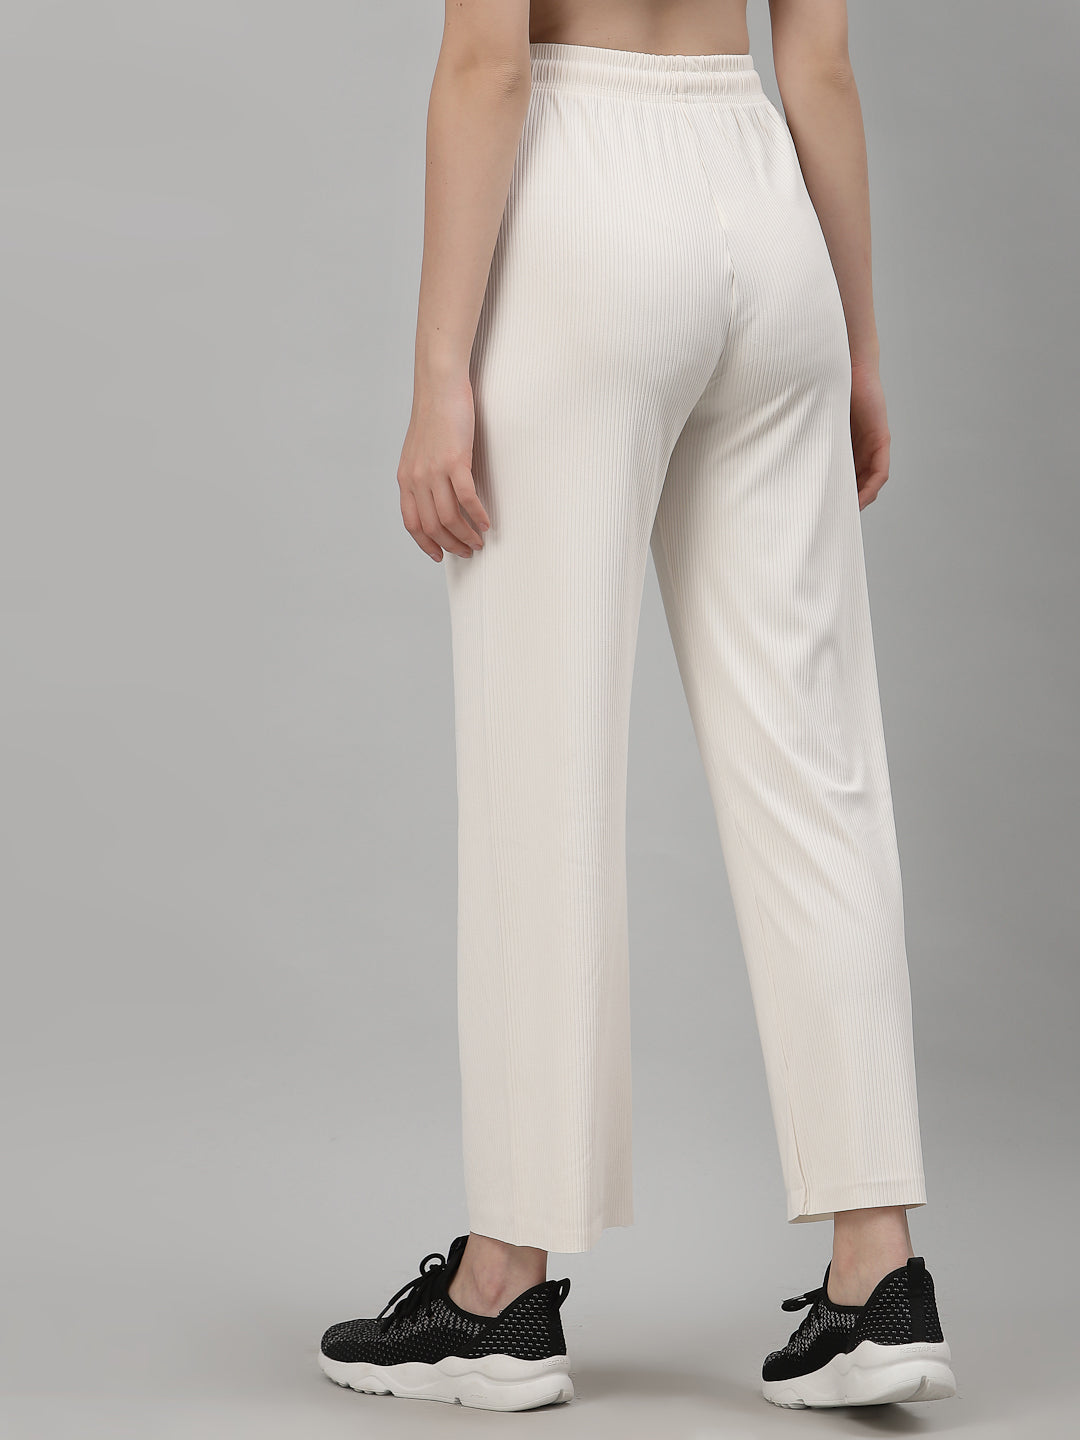 Buy Wide Linen Pants, White Palazzo Pants, Wide Leg Pants for Women, White  Linen Trousers, Summer Pants, White Trousers, High Waist Pants Online in  India - Etsy